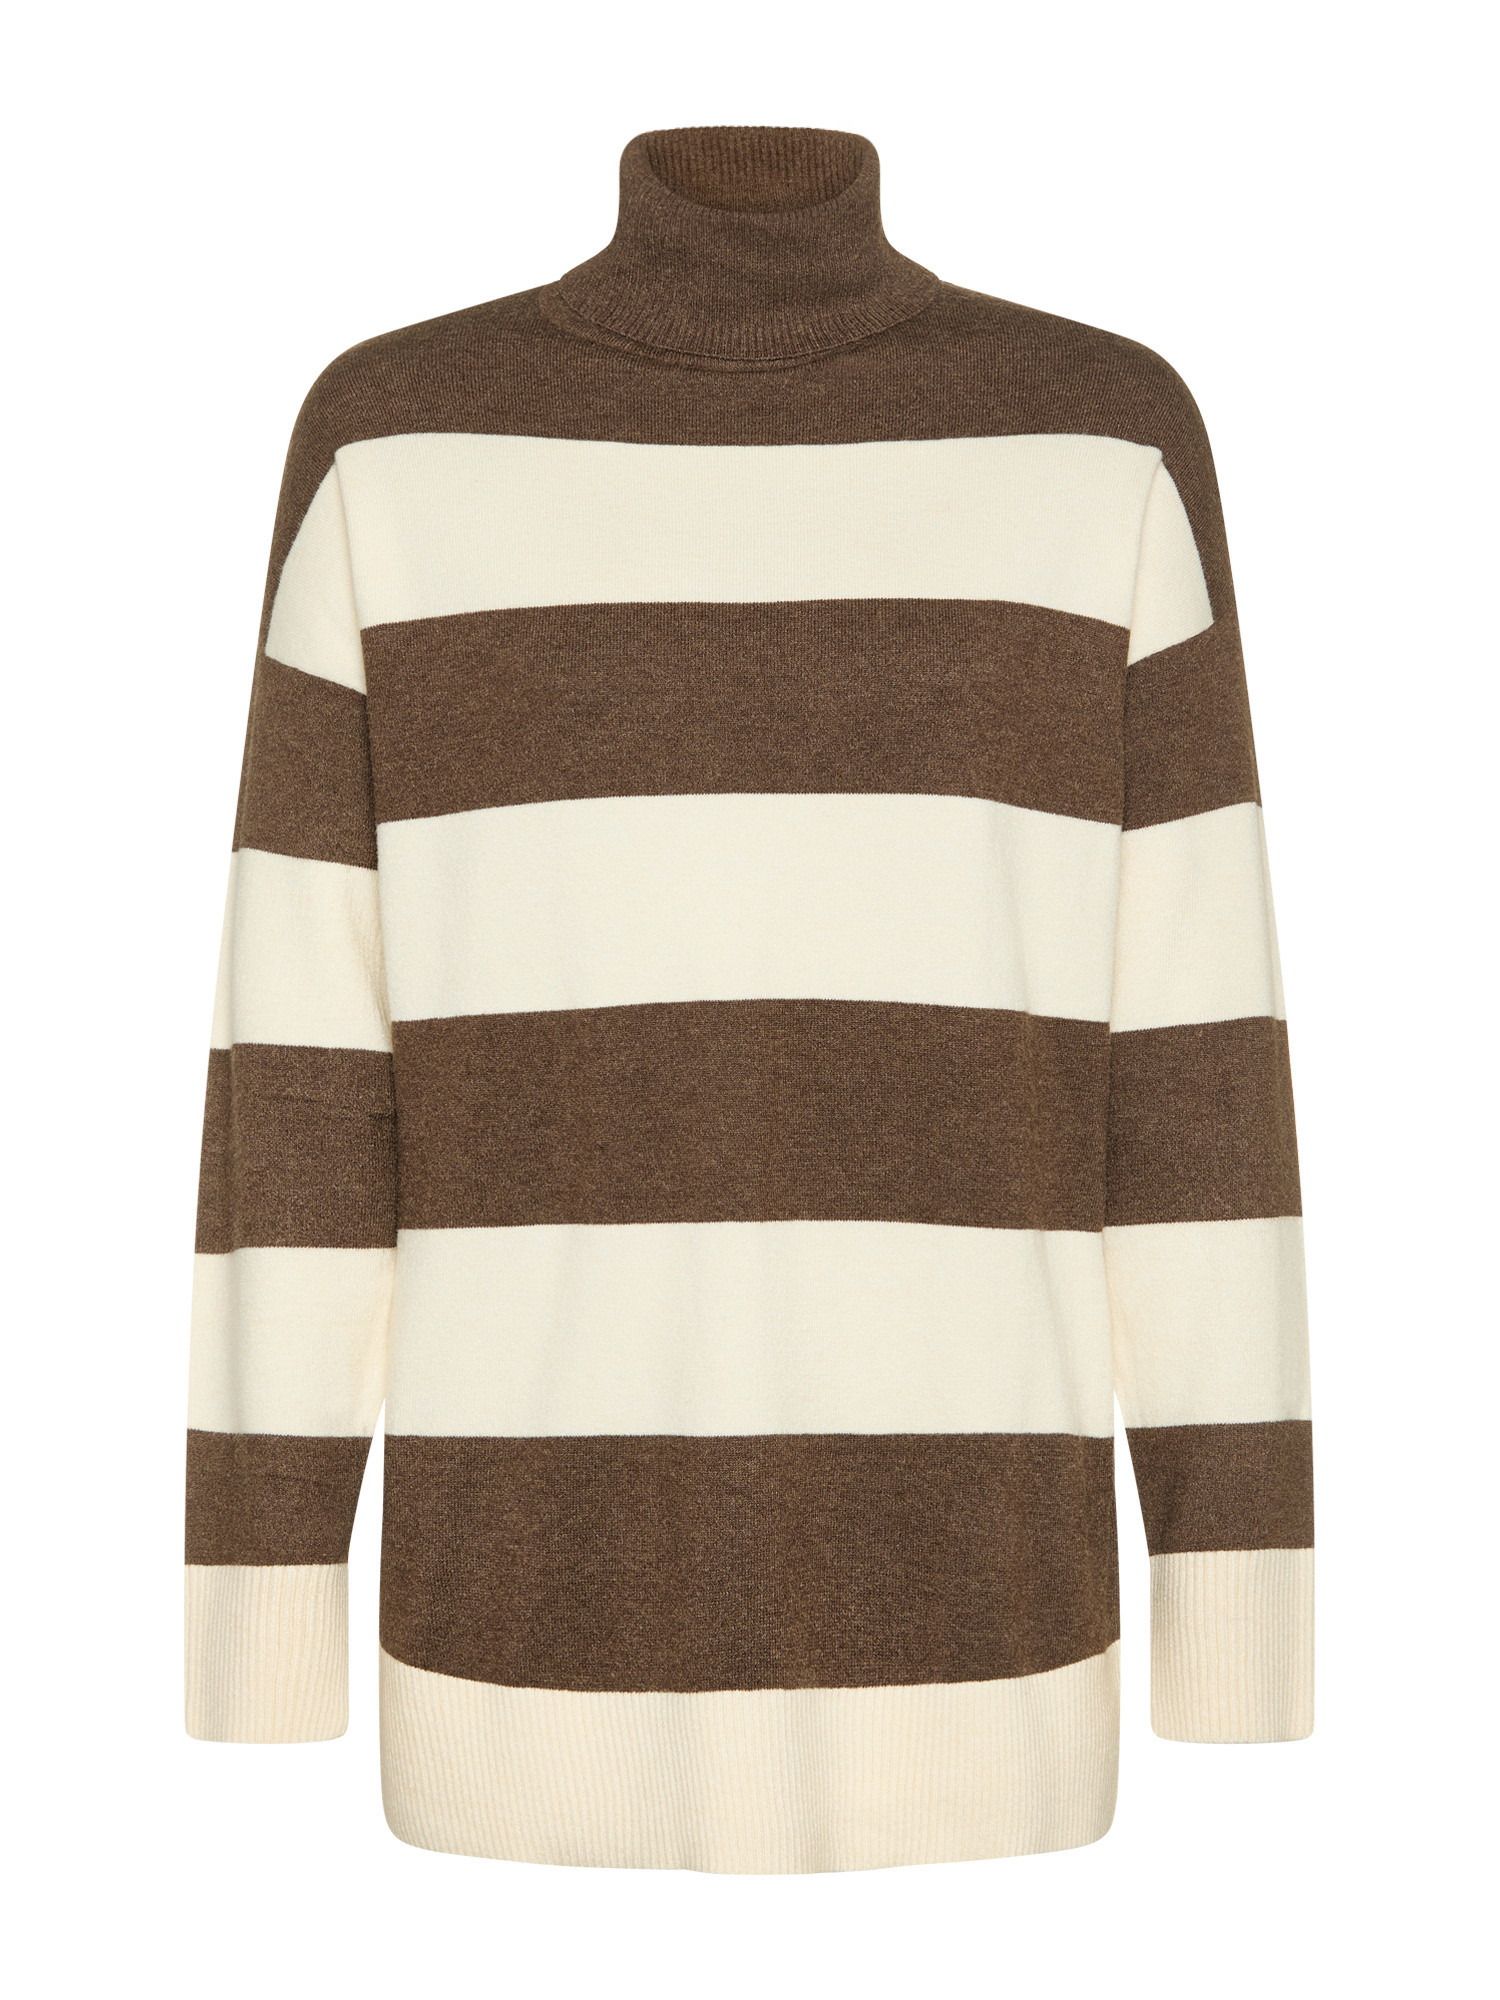 Only - Striped knit turtleneck, Brown, large image number 0